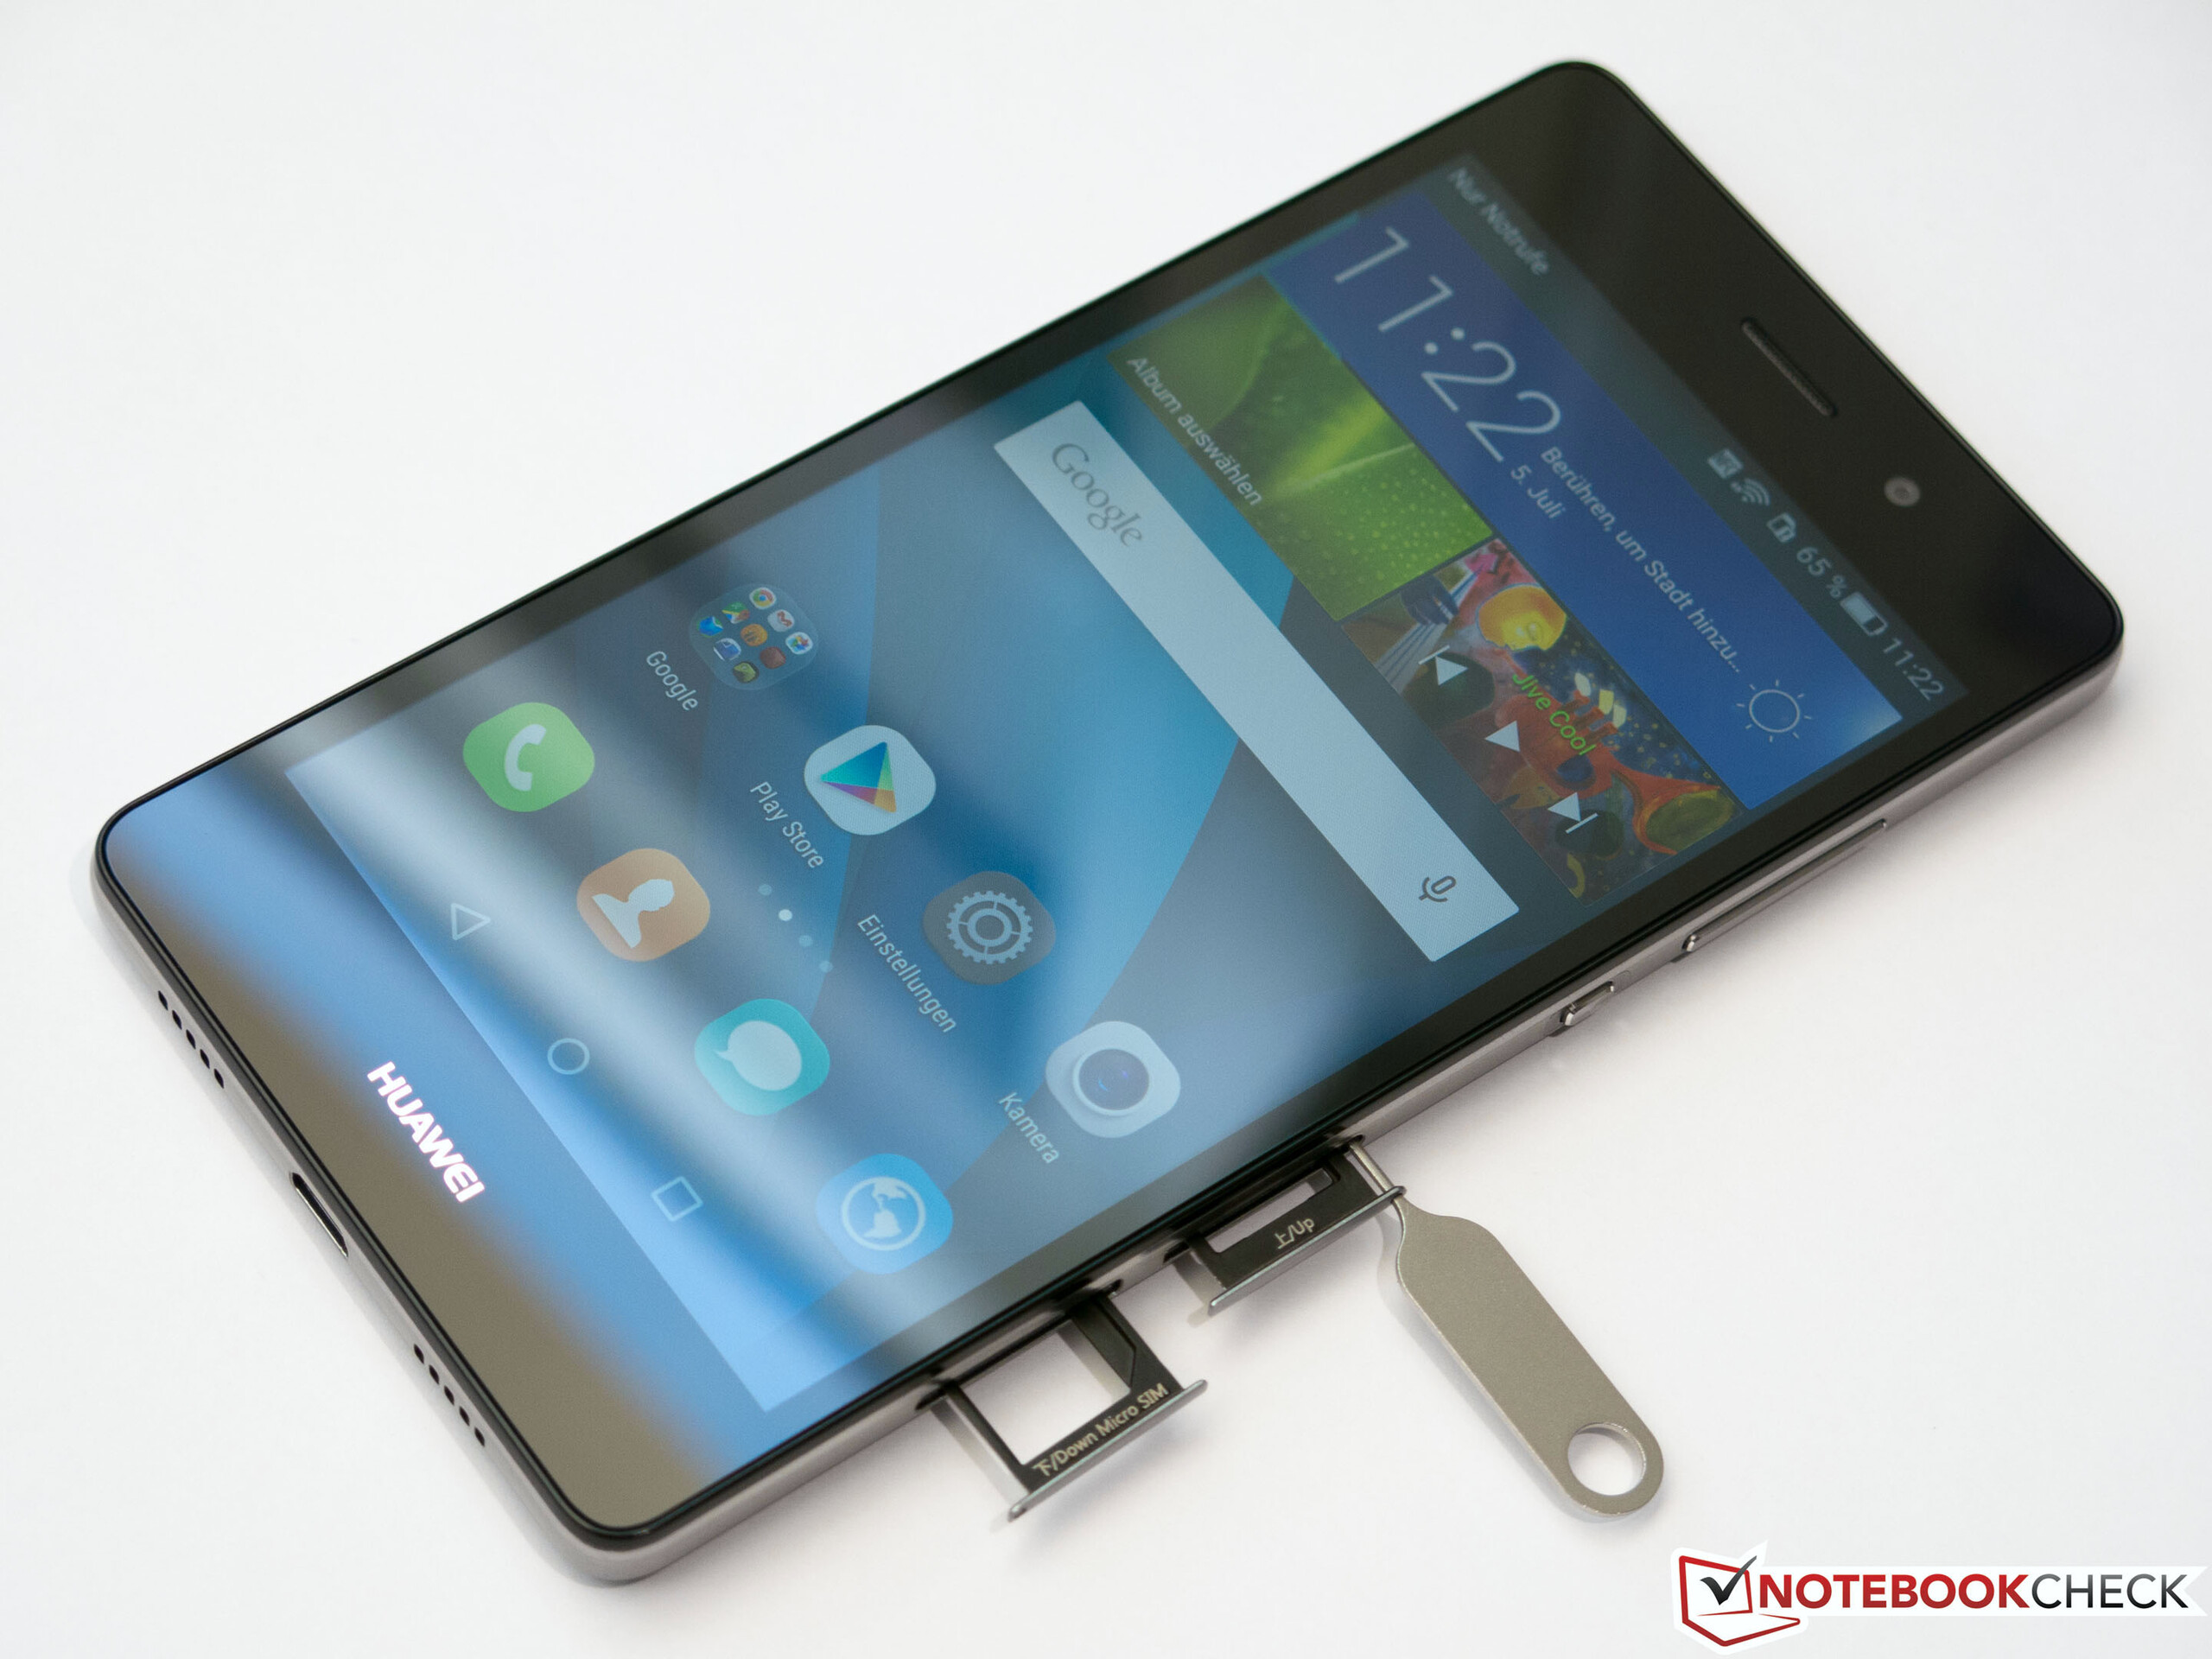 Keuze radium Schat Huawei P8 lite Smartphone Review - NotebookCheck.net Reviews